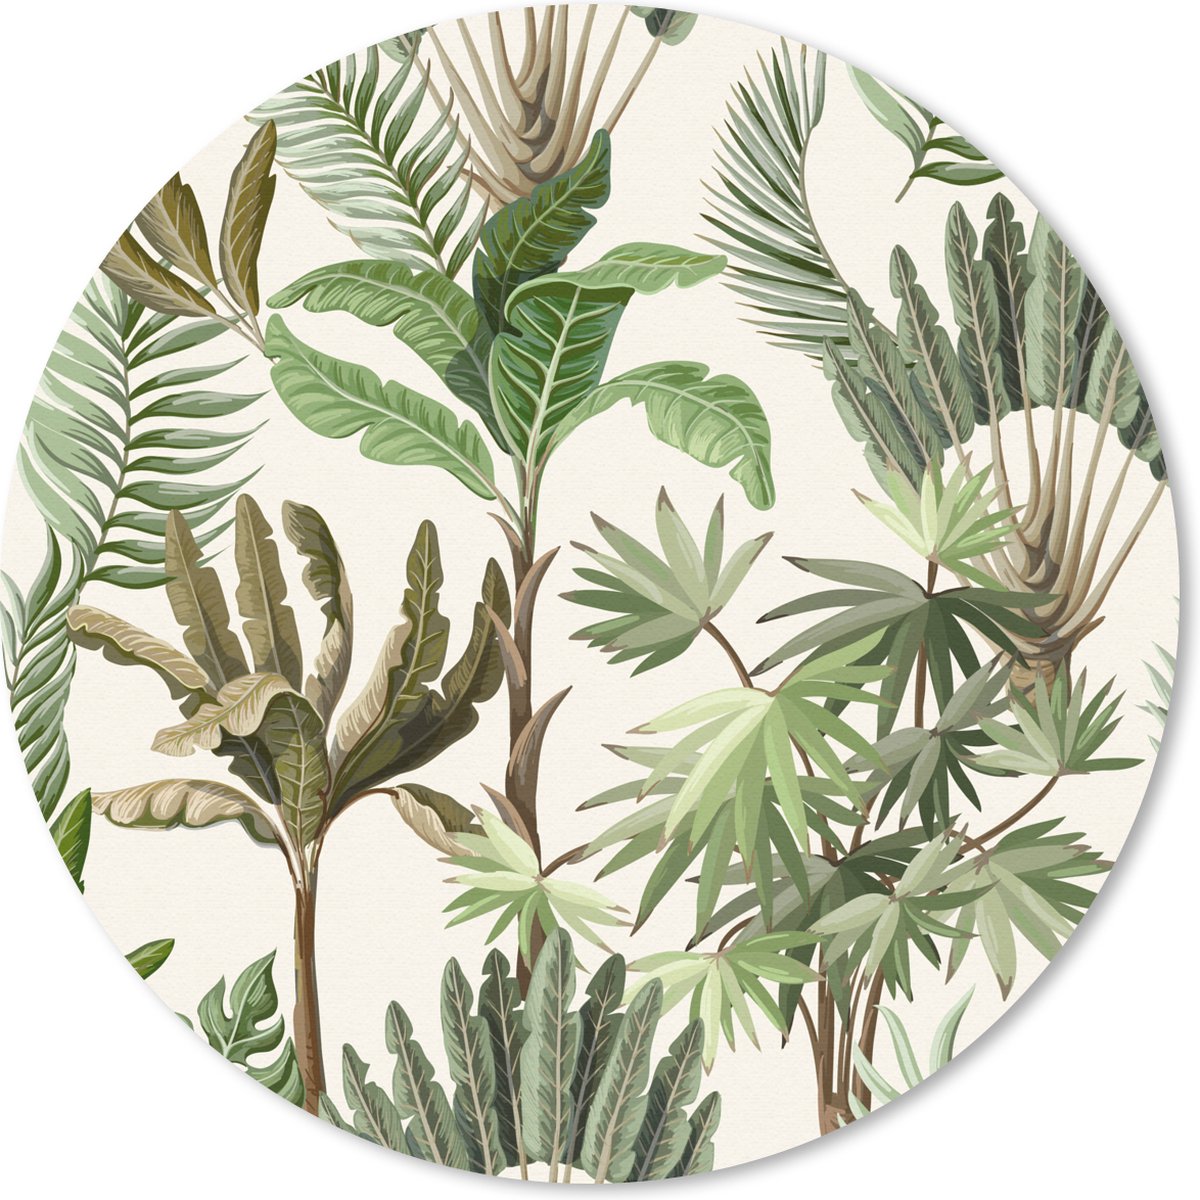 Muismat - Mousepad - Rond - Jungle - Palmboom - Bananenplant - Kinderen - Natuur - Planten - 30x30 cm - Ronde muismat